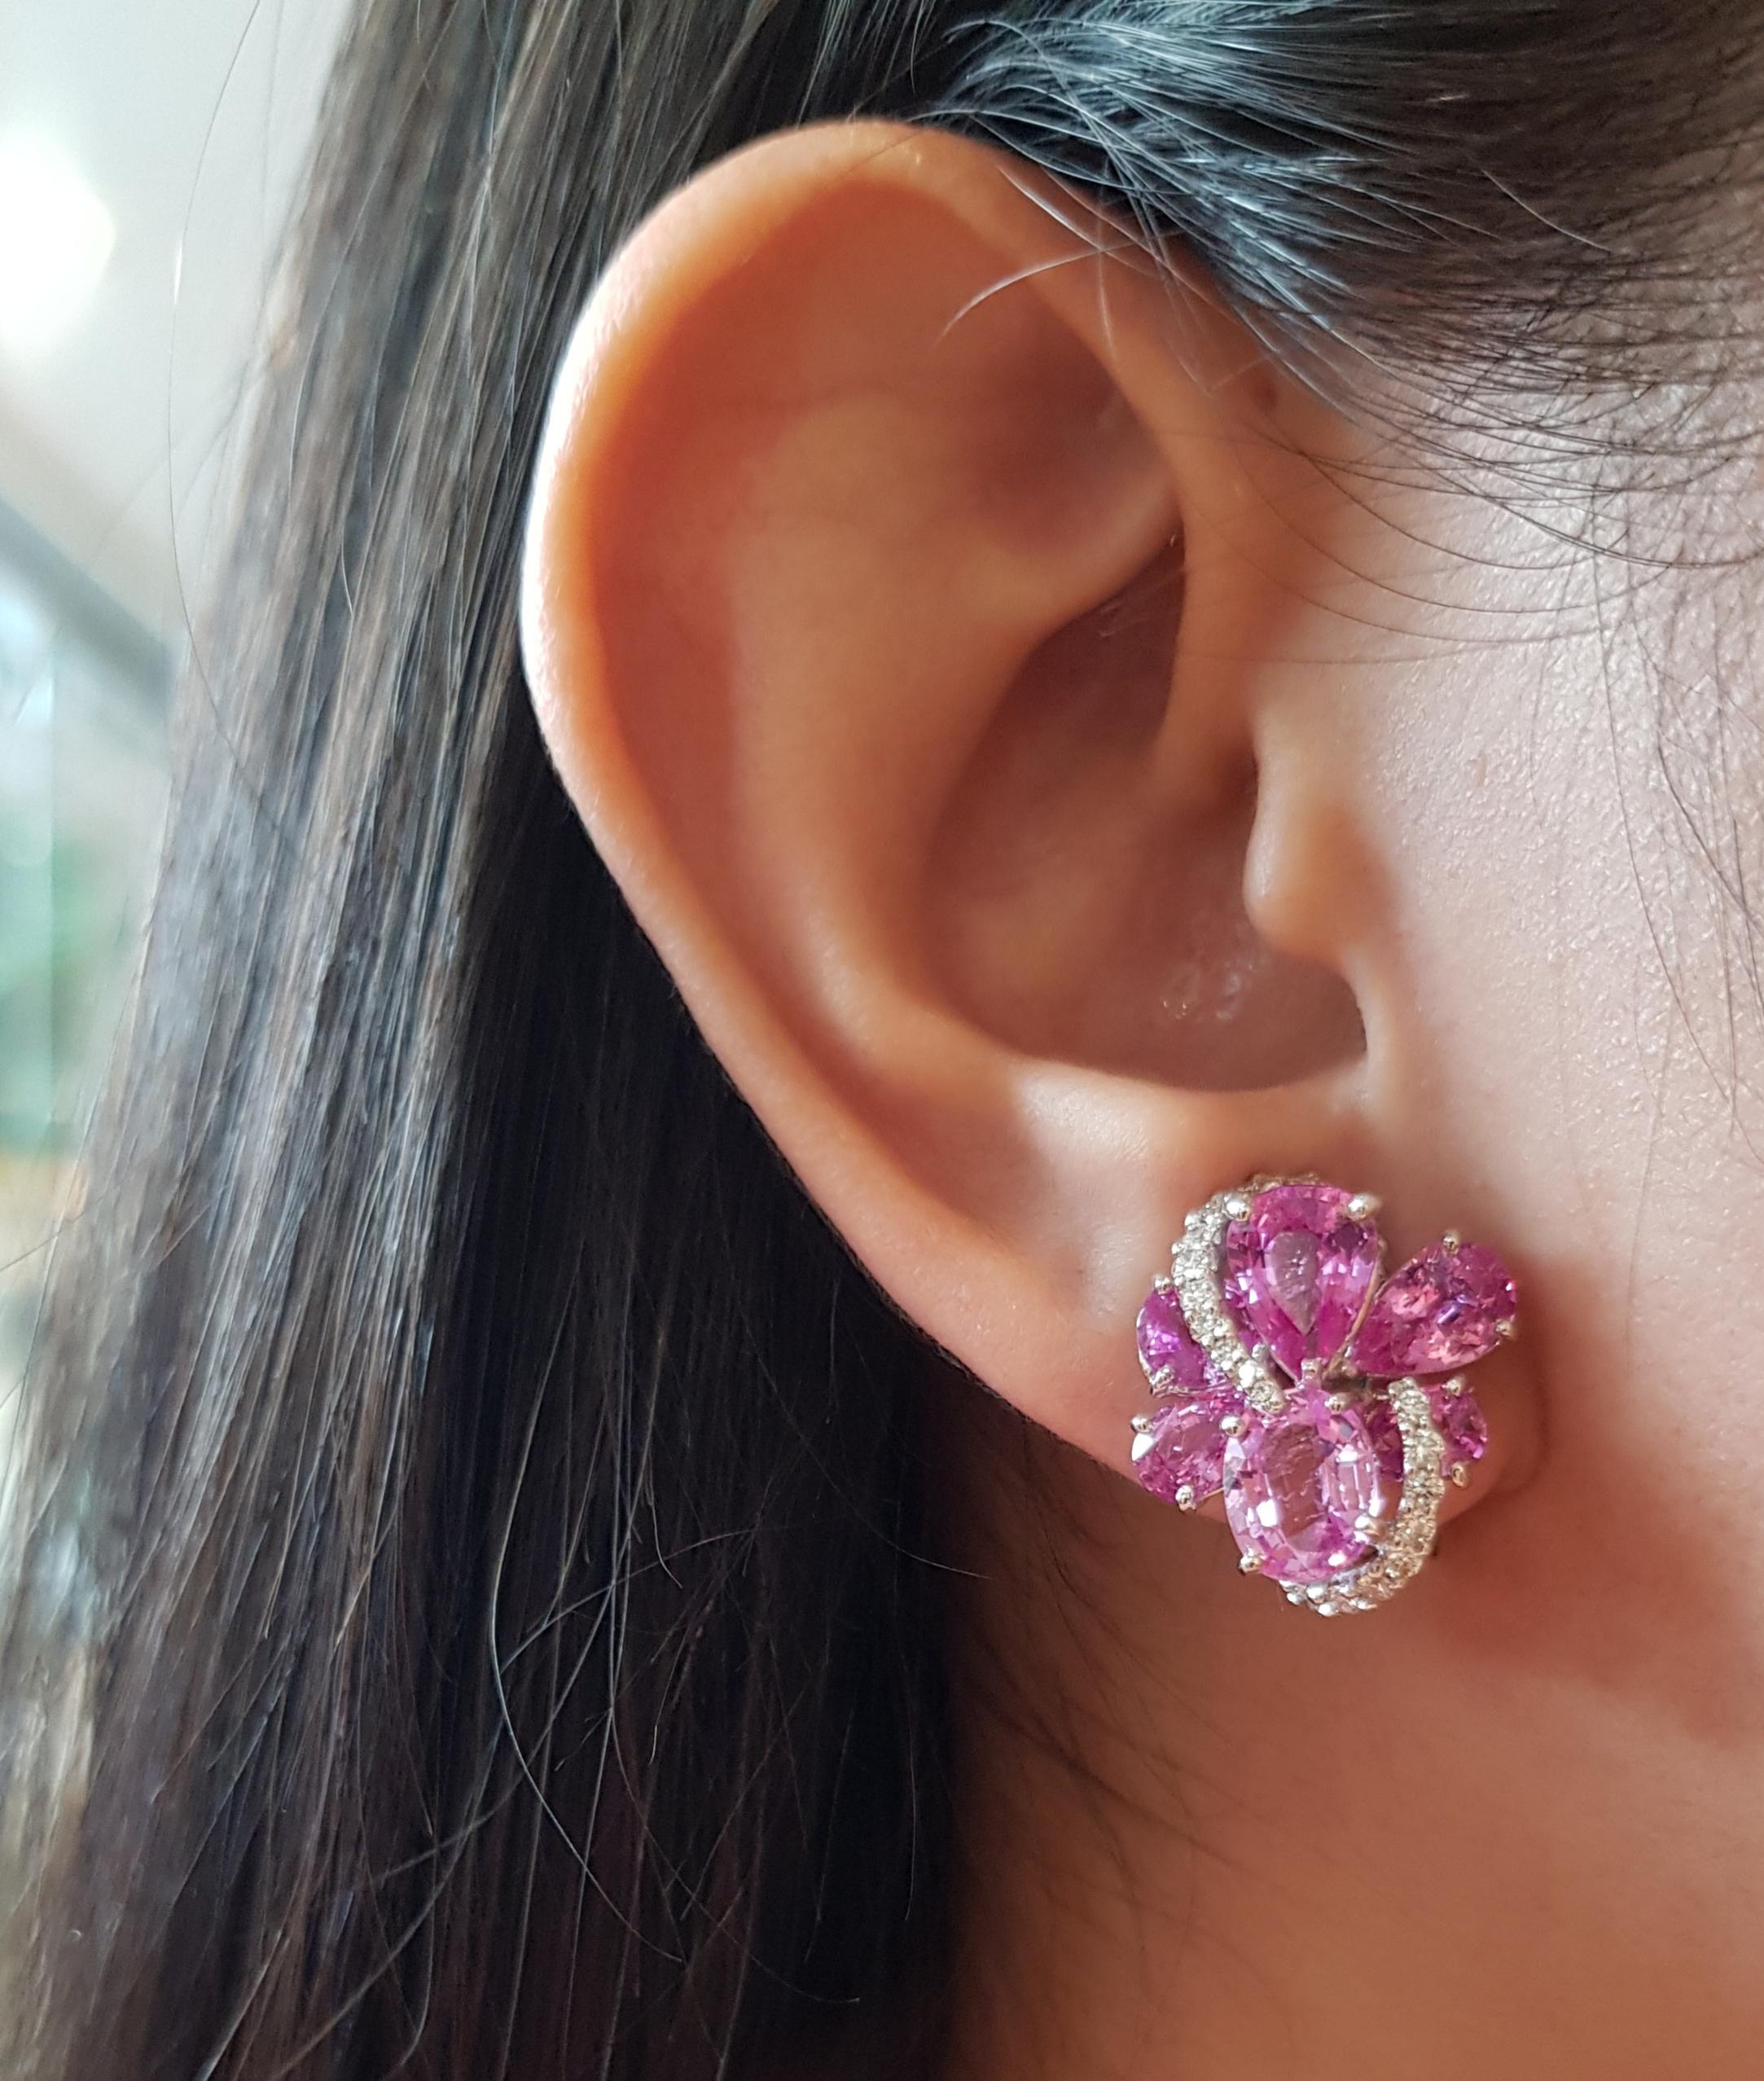 Pink Sapphire 10.16 carats with Diamond 0.66 carat Earrings set in 18 Karat White Gold Settings

Width: 1.6 cm
Length: 1.7 cm 

